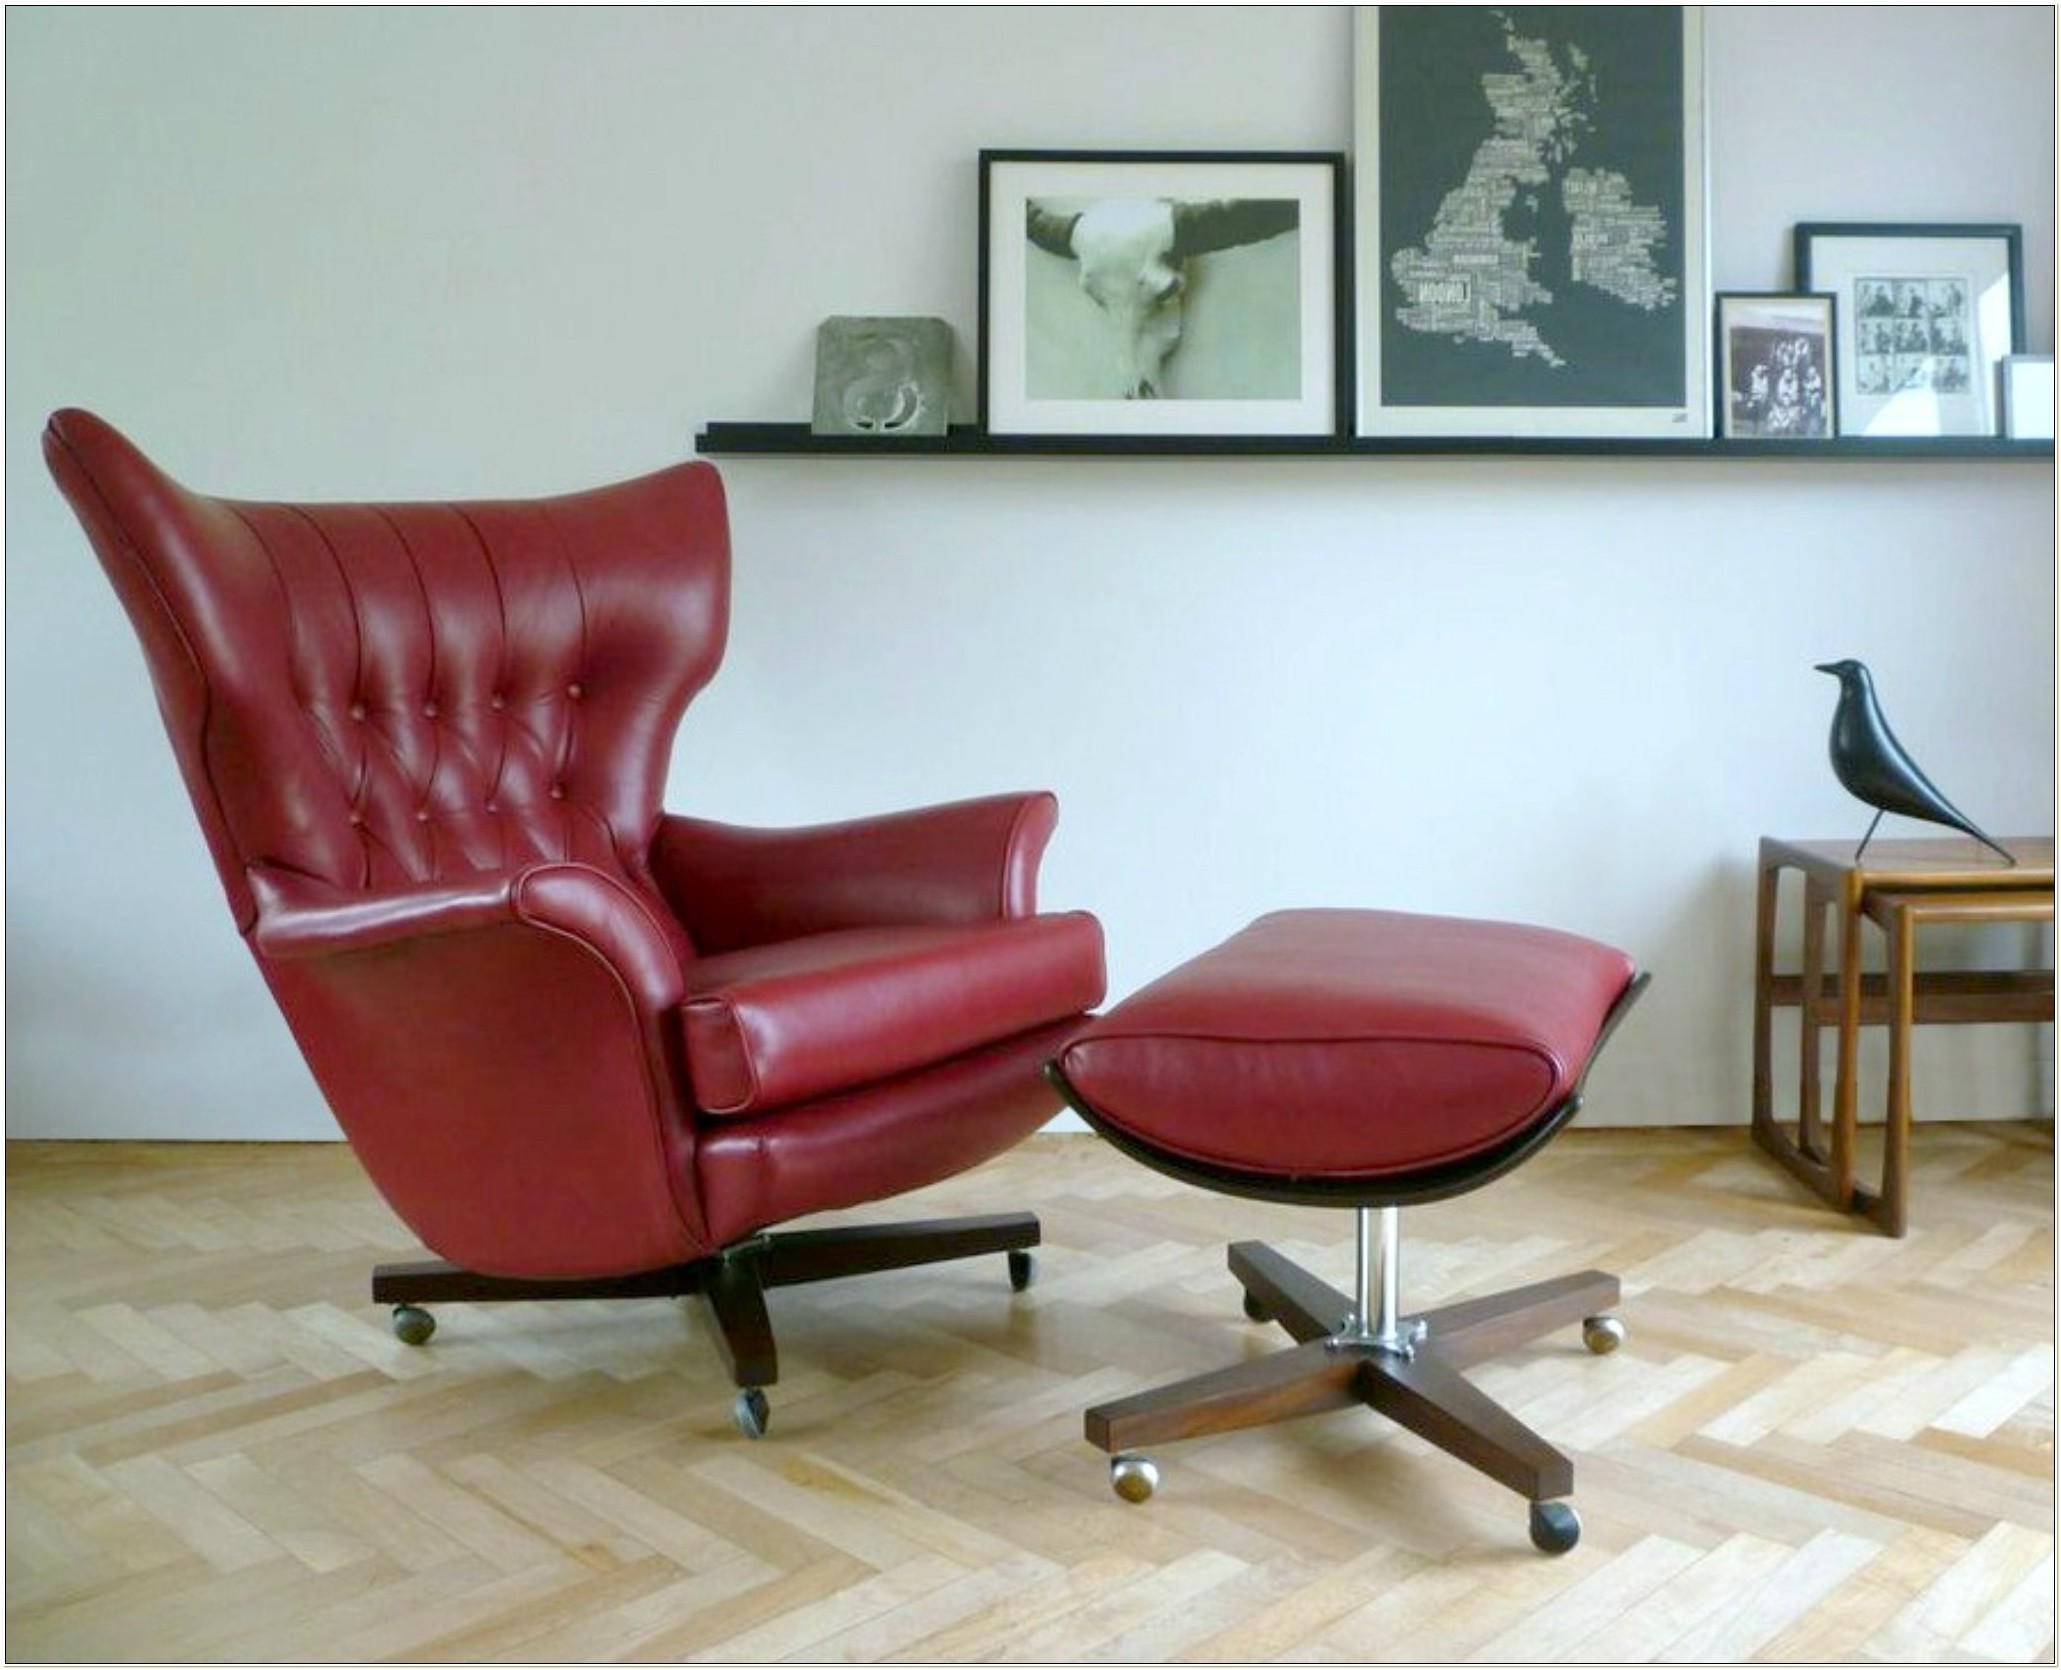 ergonomic living room furniture buy